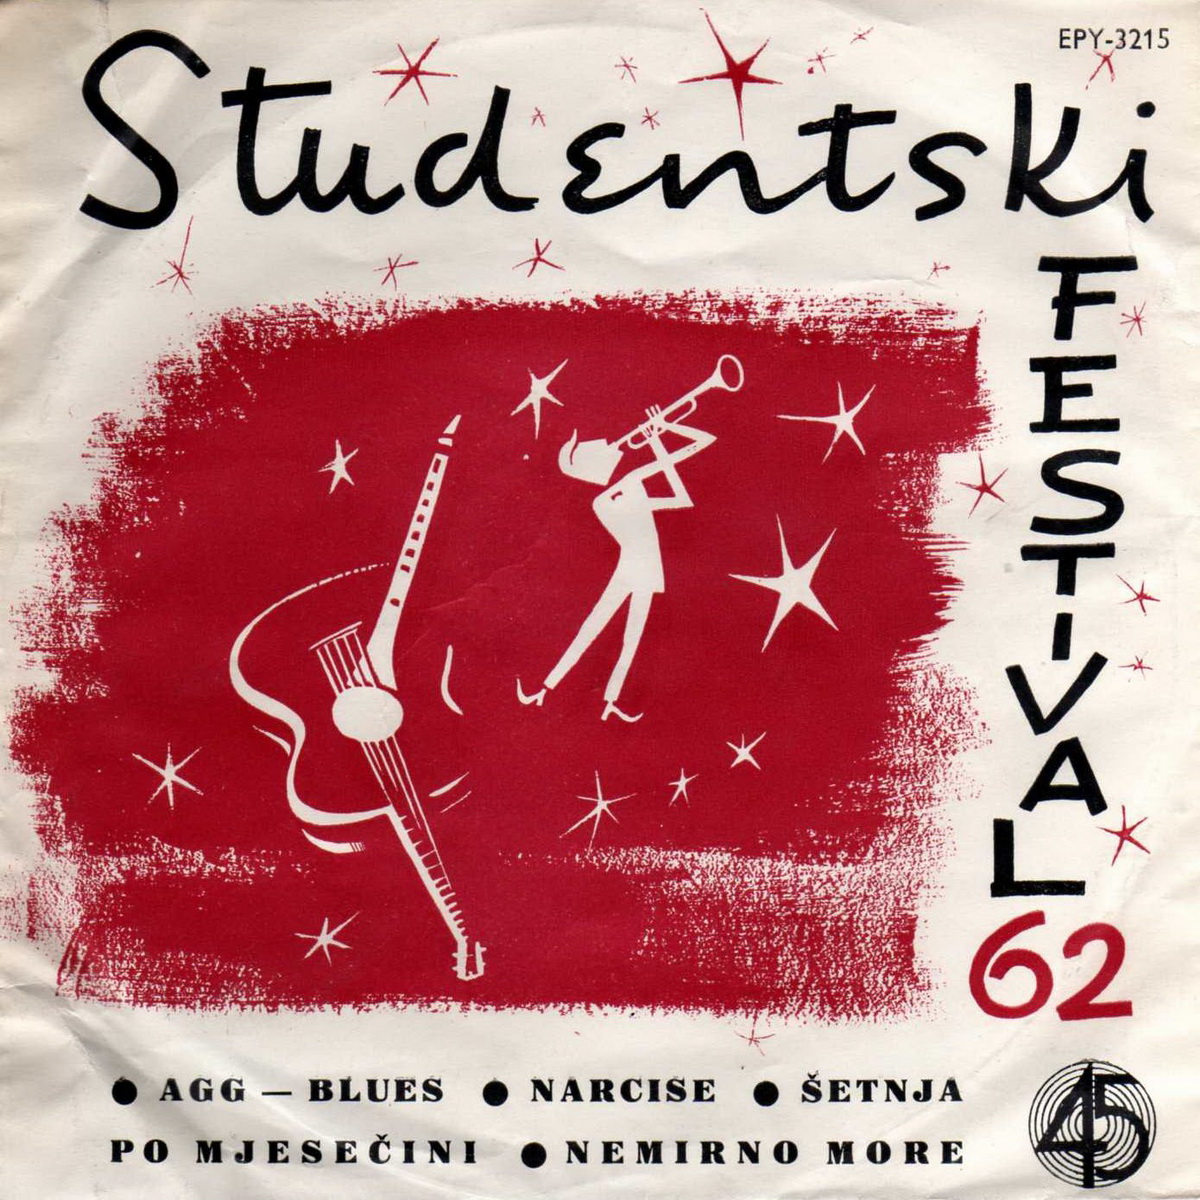 VA 1963 Studentski festival 62 a